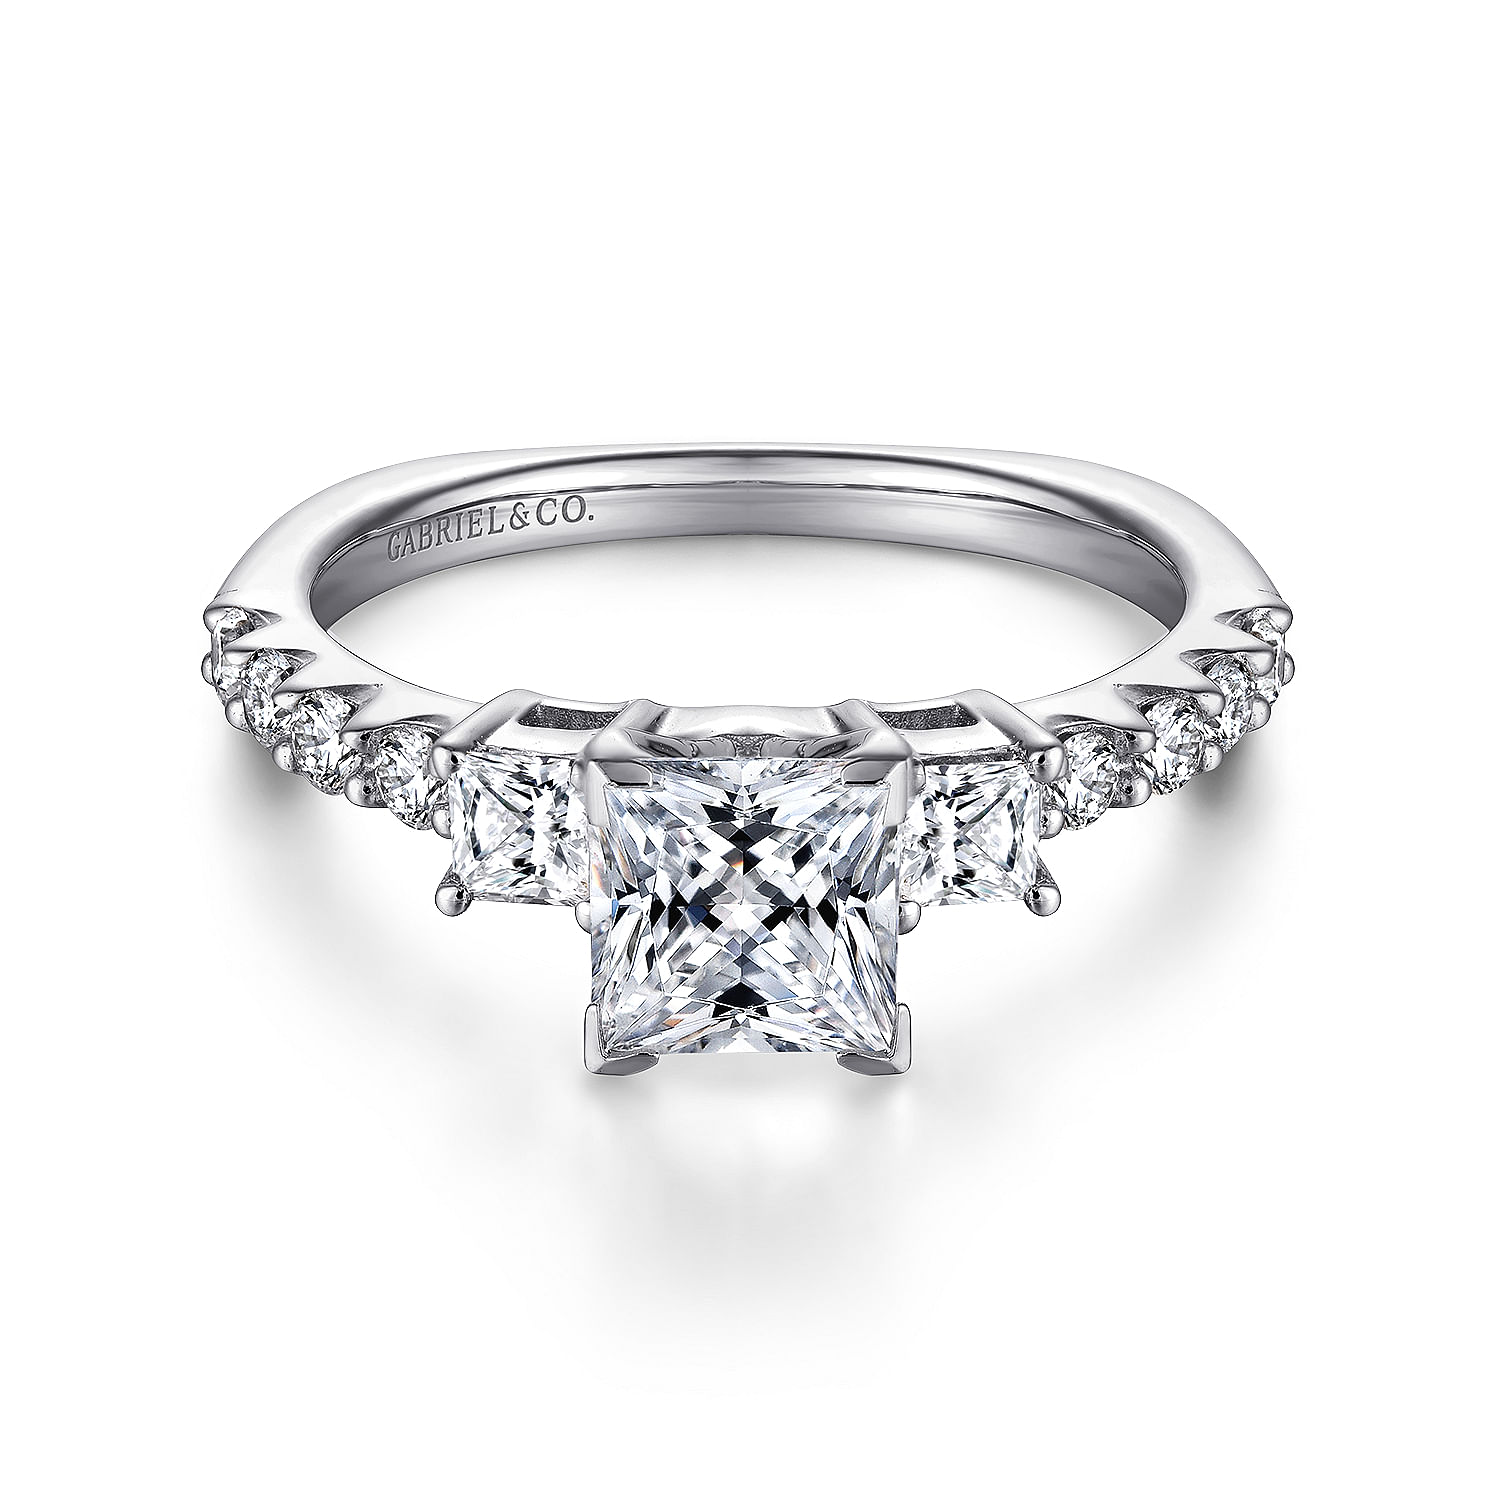 Emerson---14K-White-Gold-Princess-Cut-Three-Stone-Diamond-Engagement-Ring1